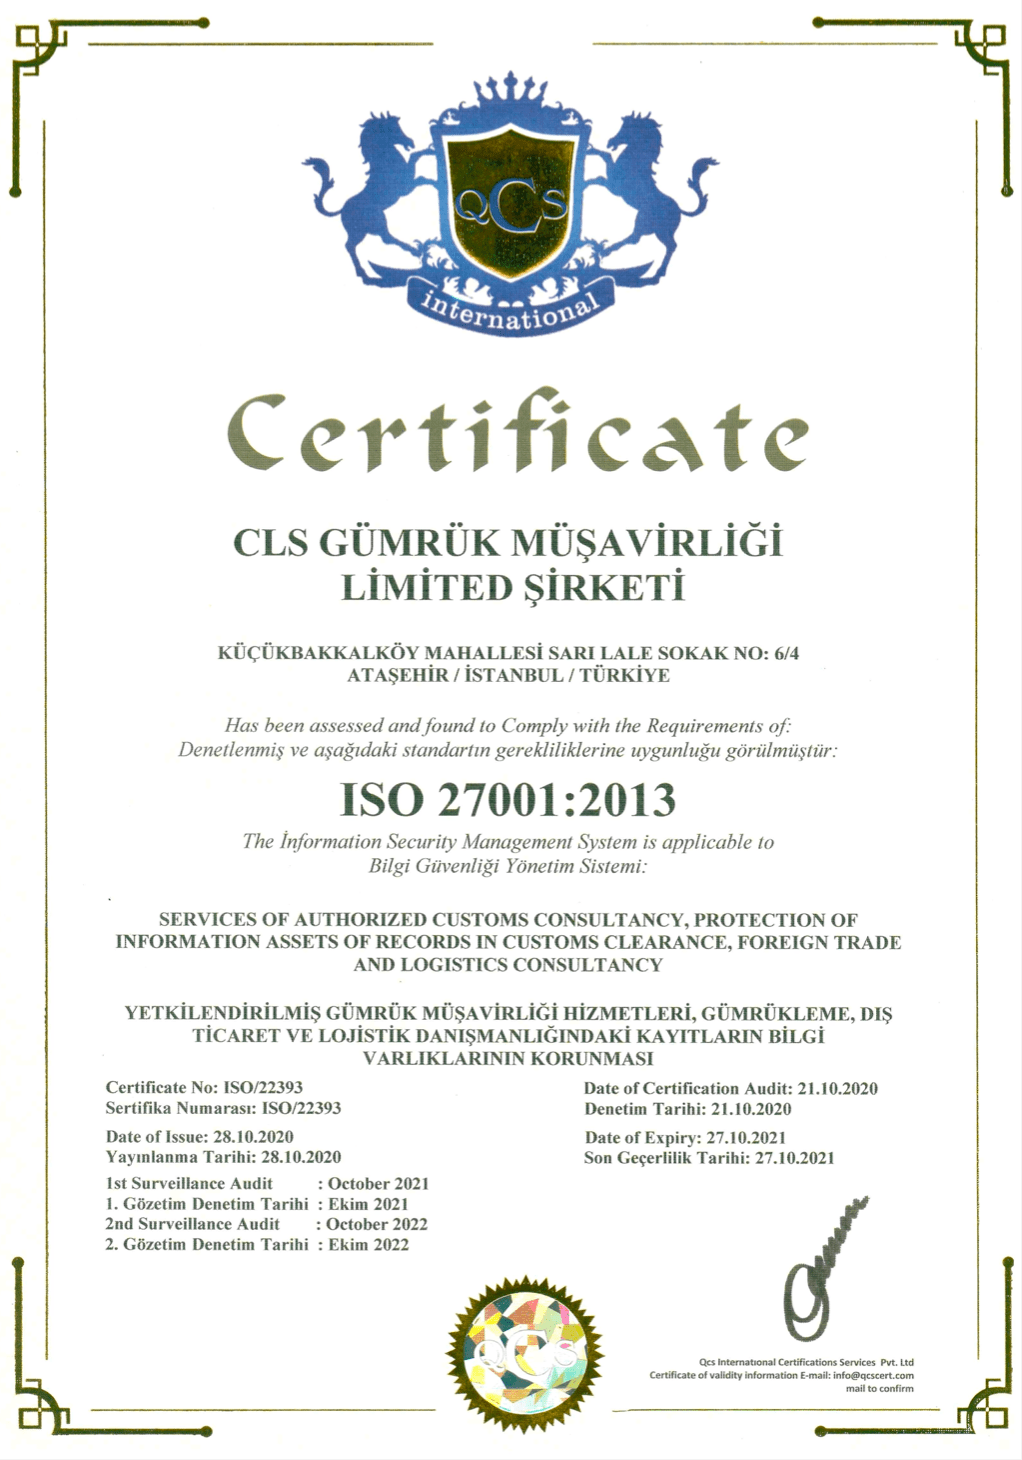 sertifika1a